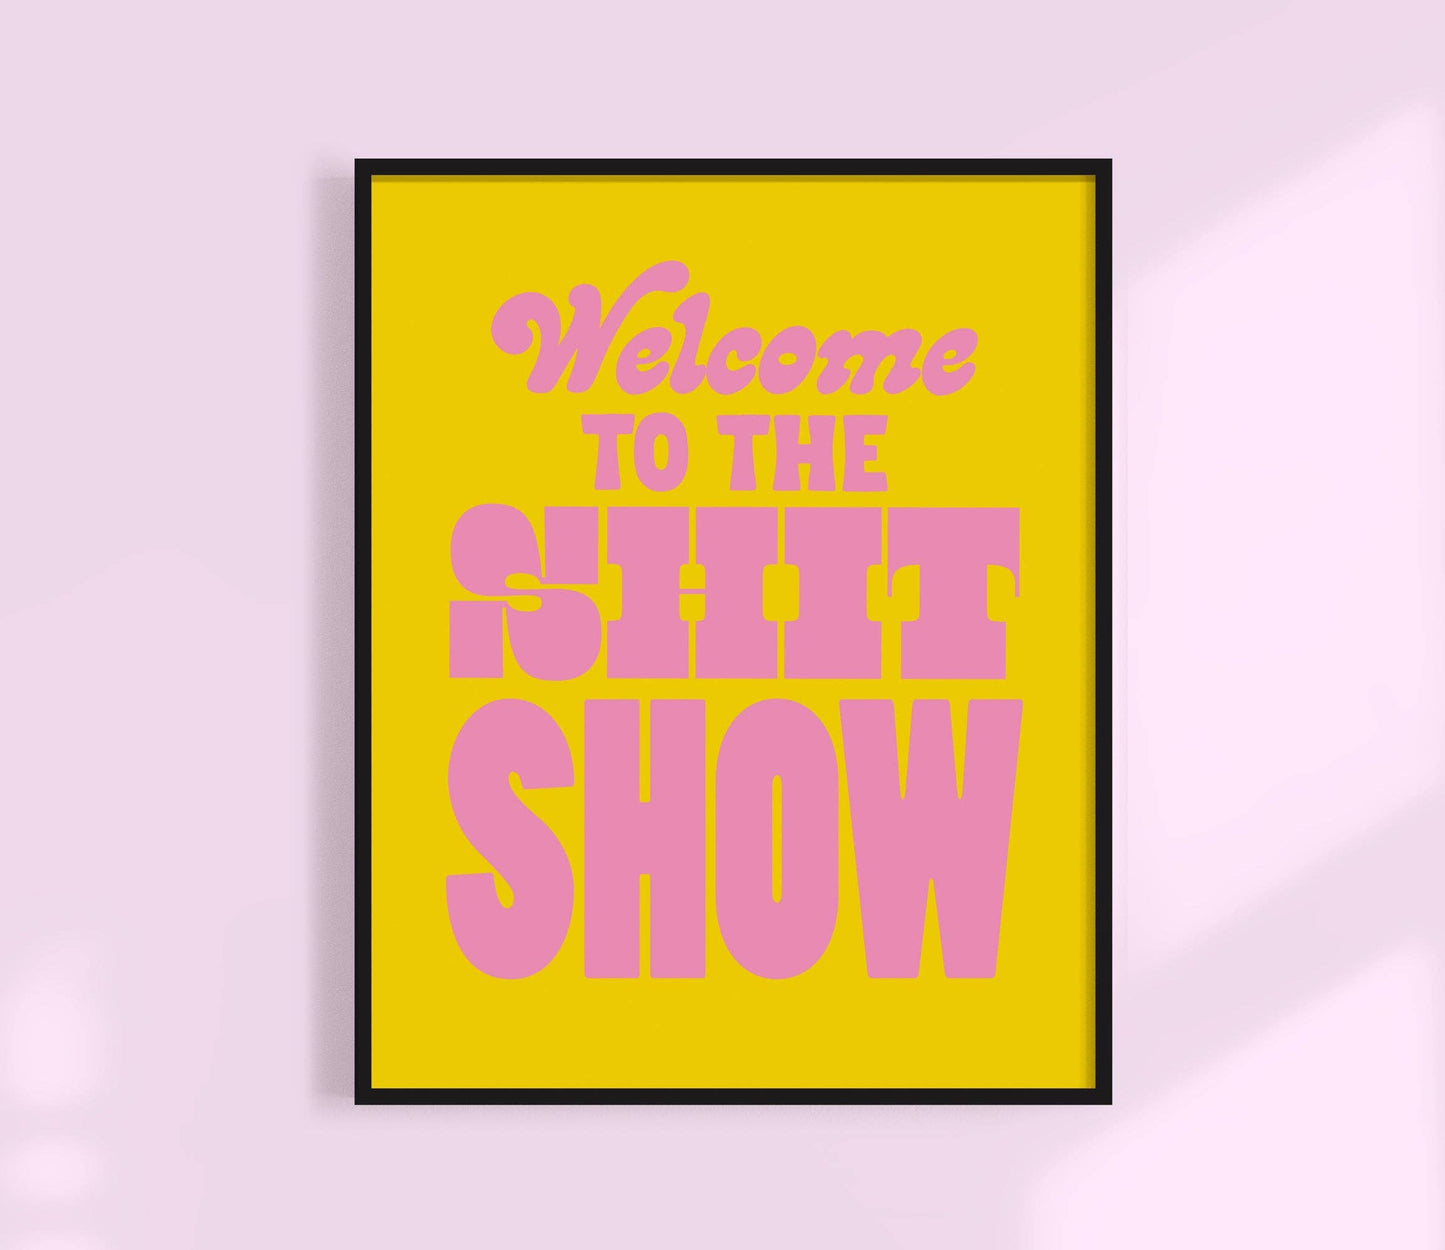 Kuku Studio - Welcome To The Shit Show Print | Colorful Wall Art: Pink / 5 x 7